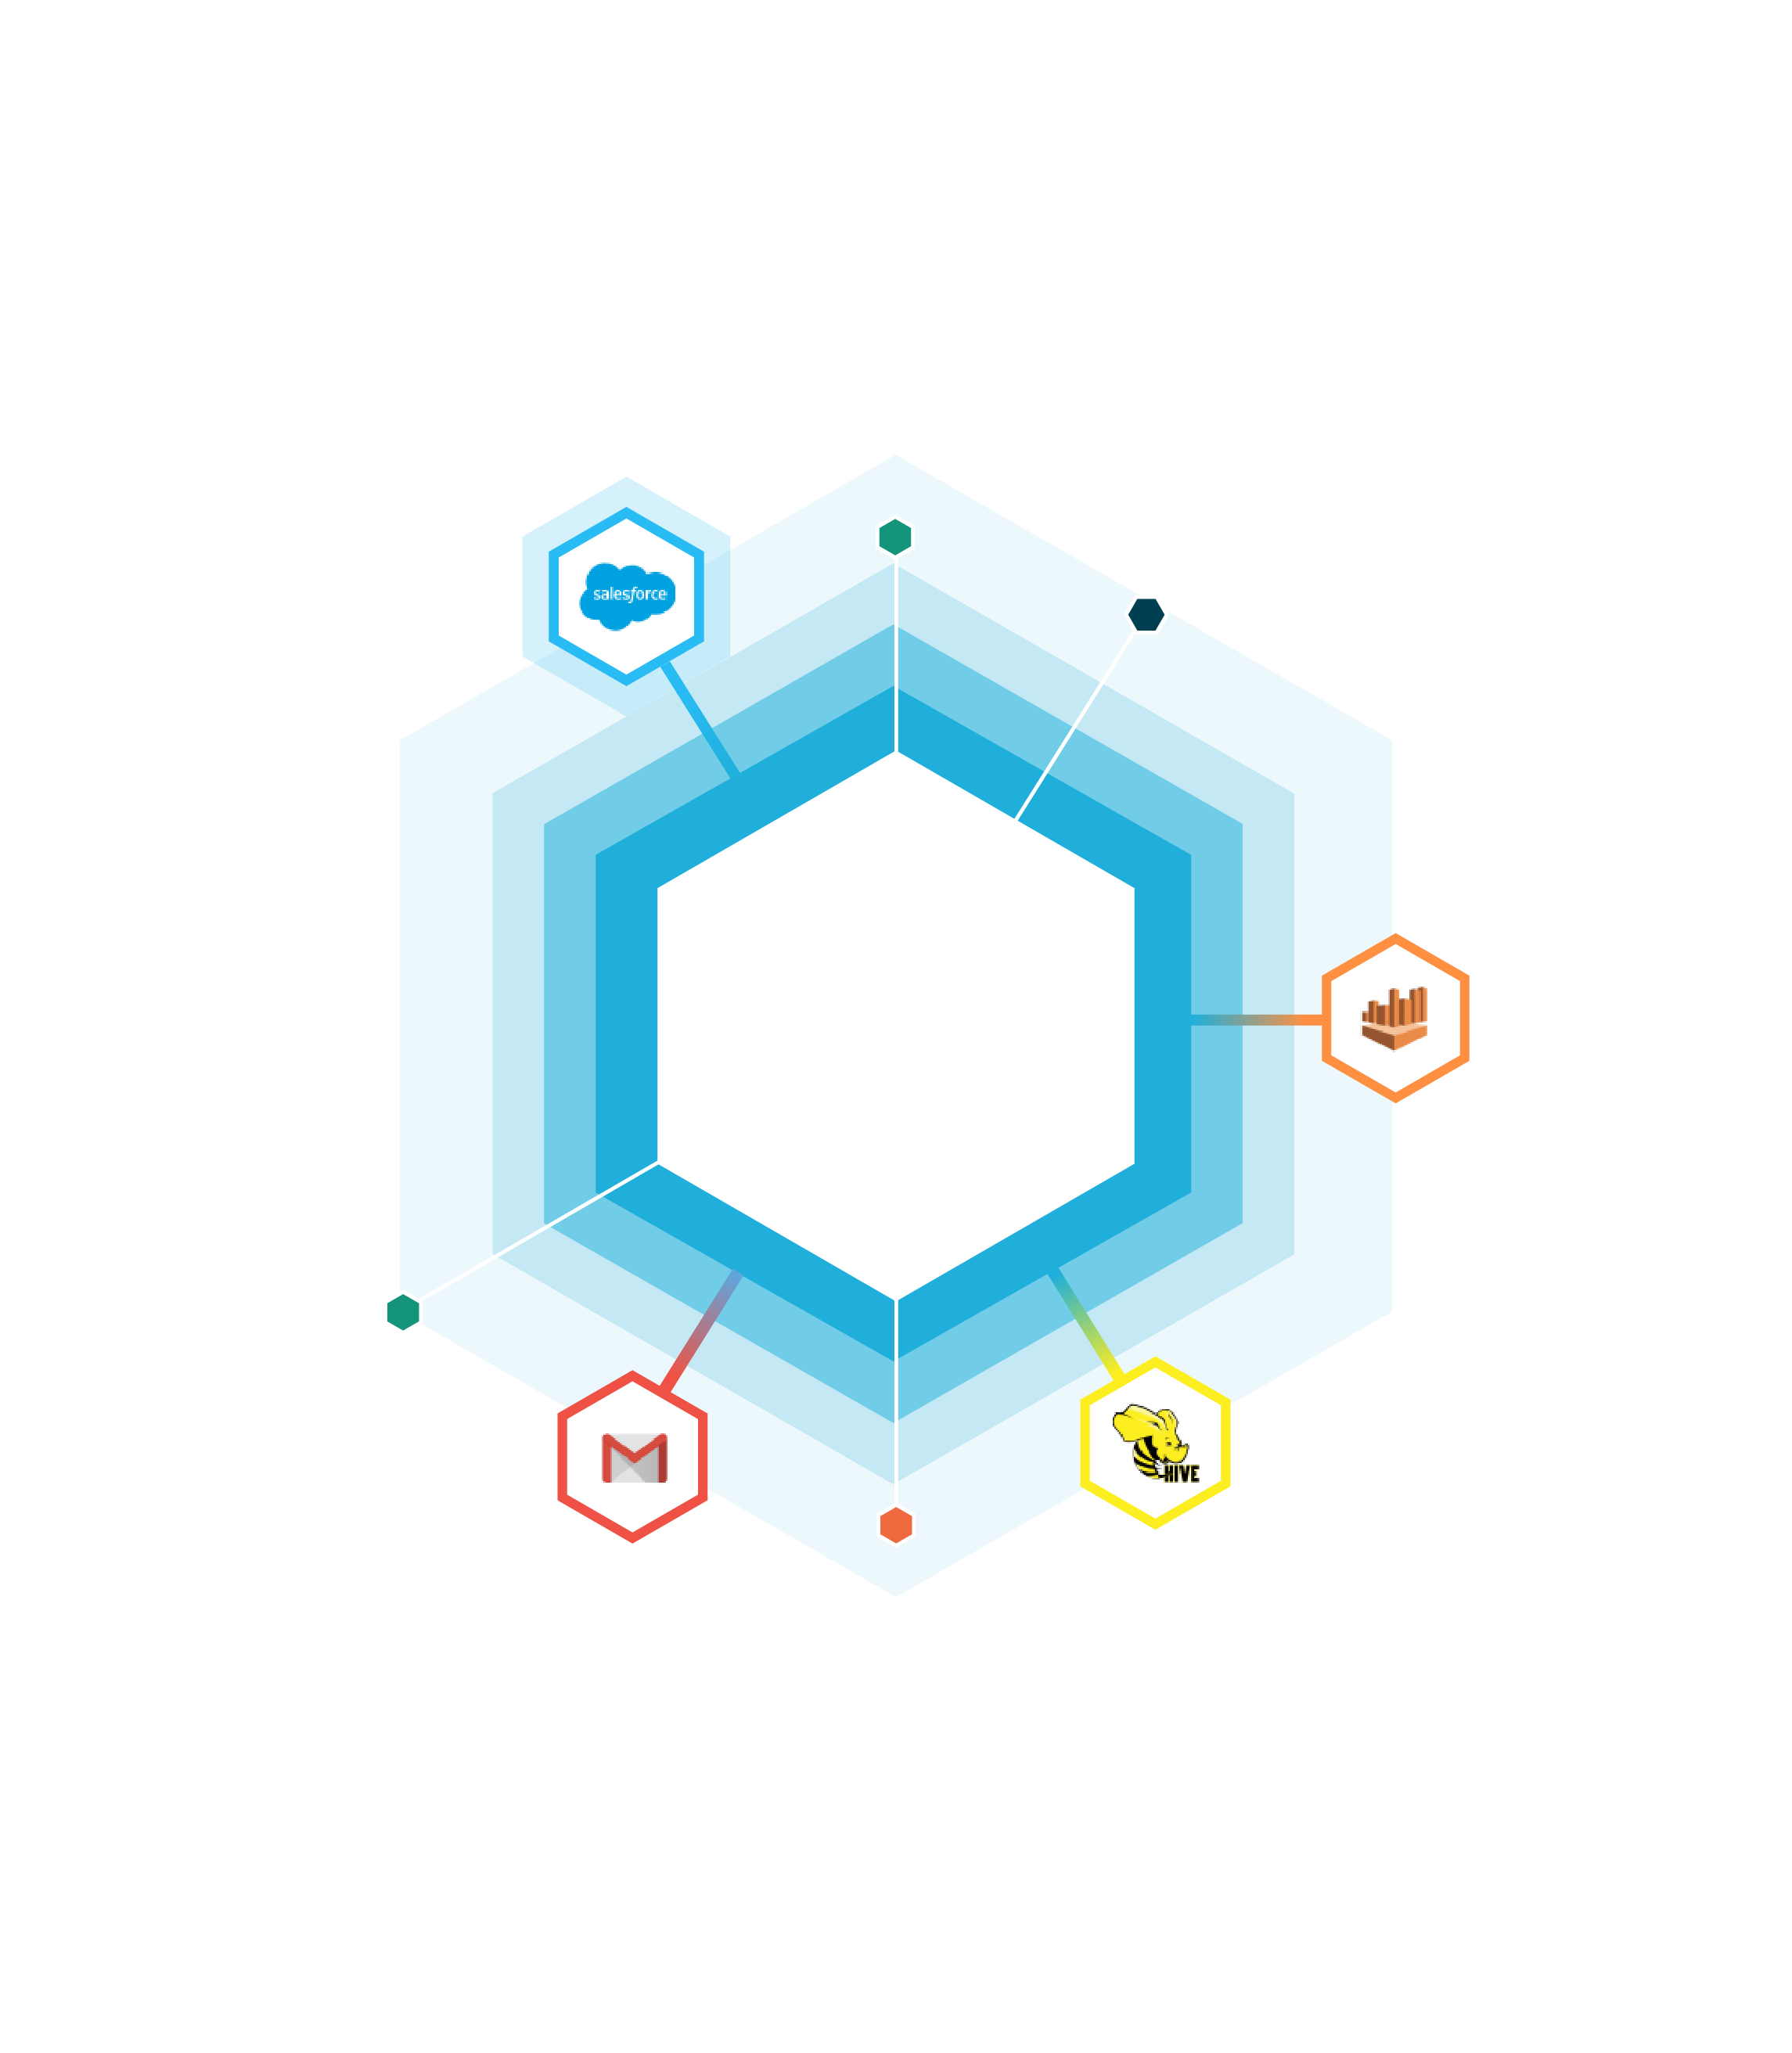 stardog hexagon logo 2